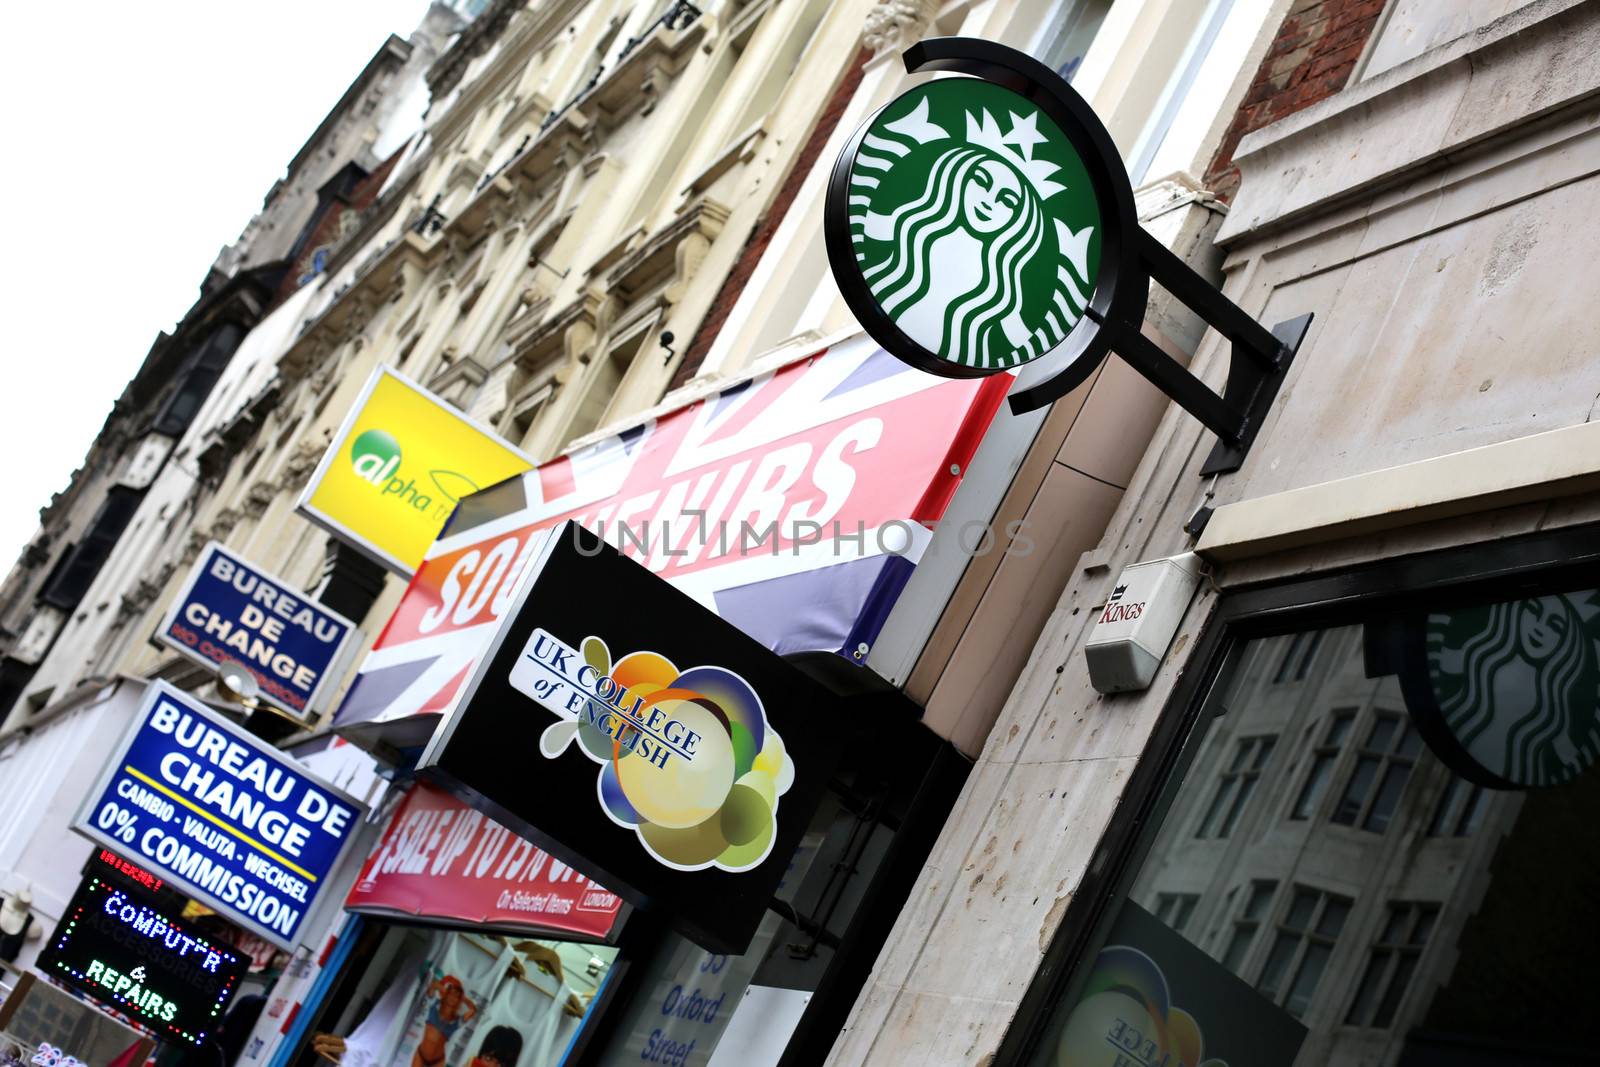 Starbuck Coffee Shop Oxford Street London